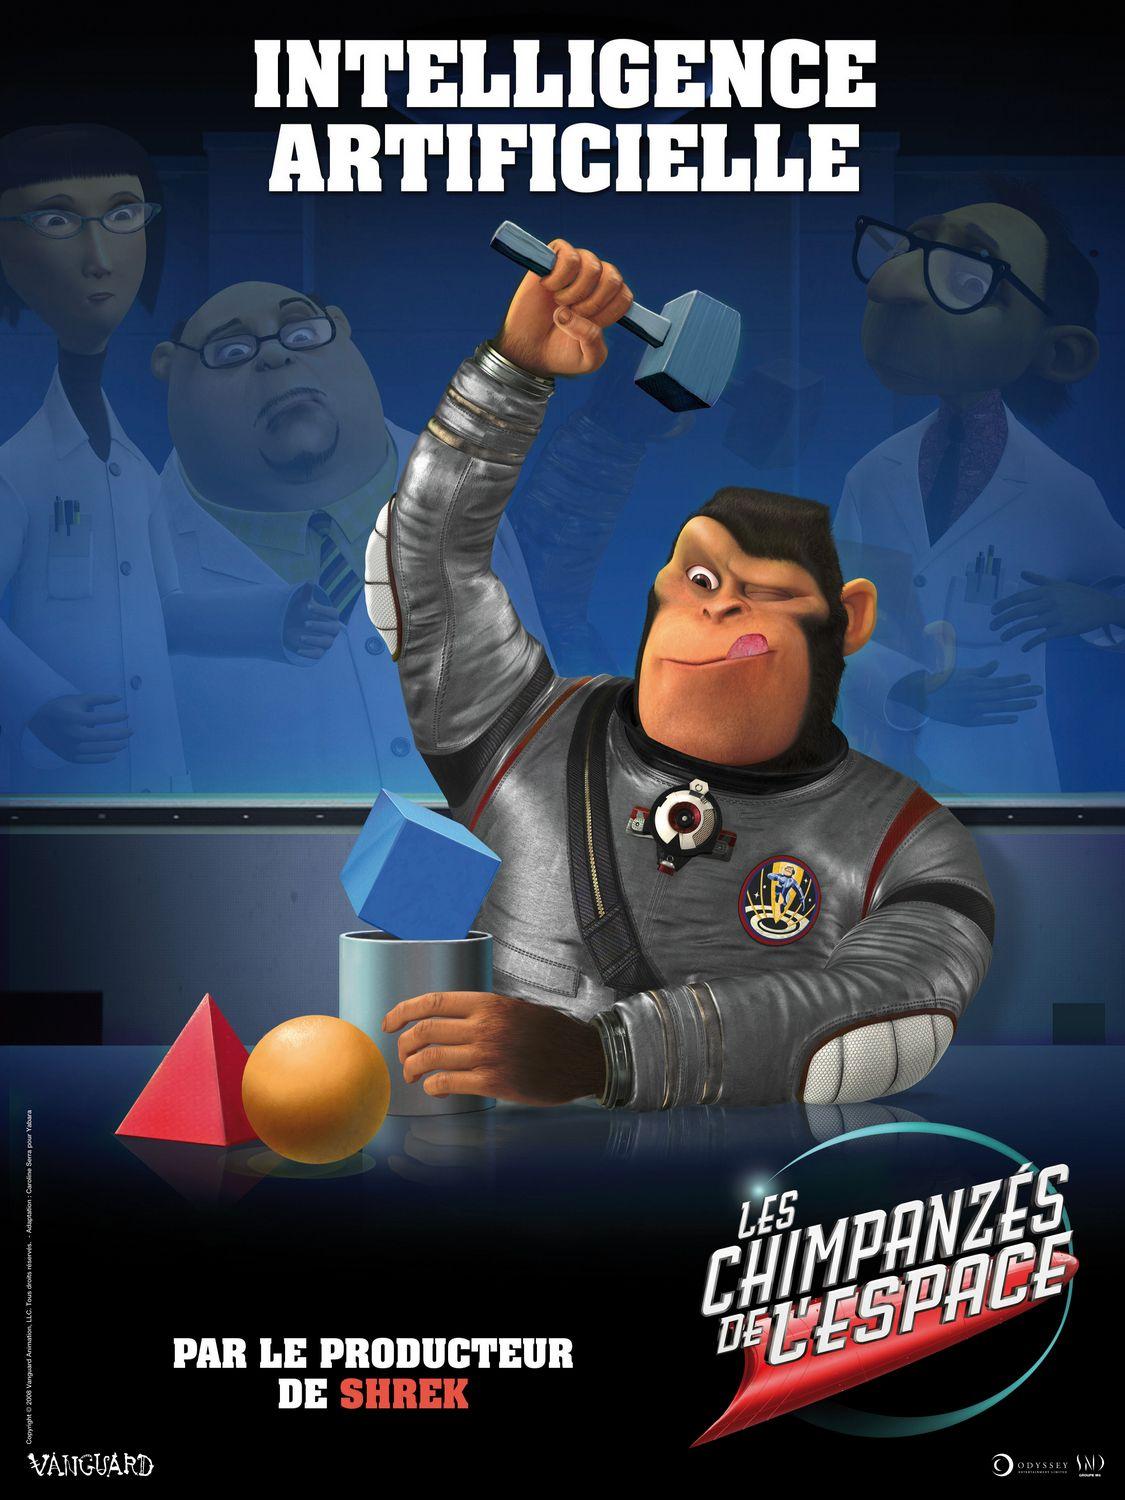 Постер фильма Мартышки в космосе | Space Chimps